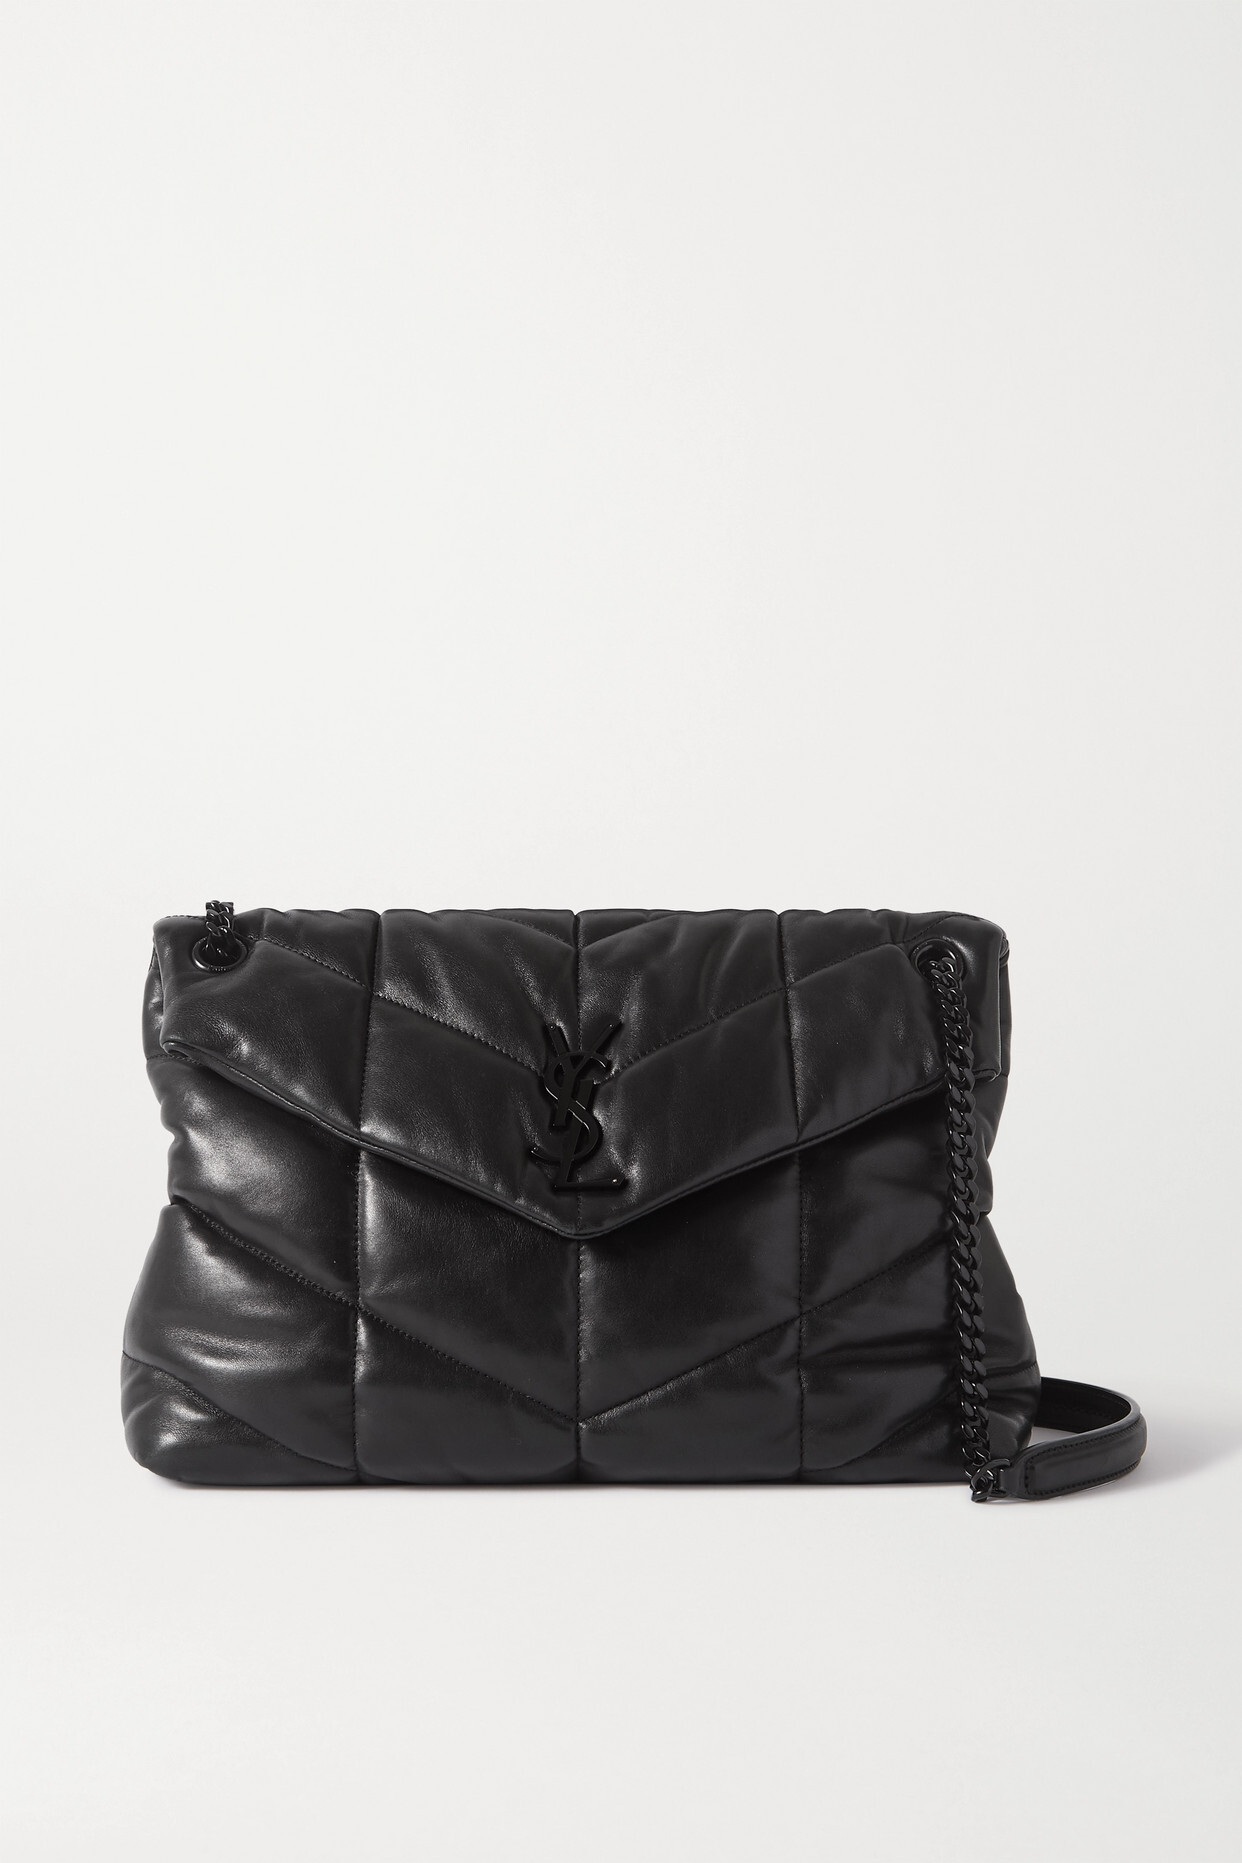 SAINT LAURENT - Loulou Puffer Quilted Leather Shoulder Bag - Black